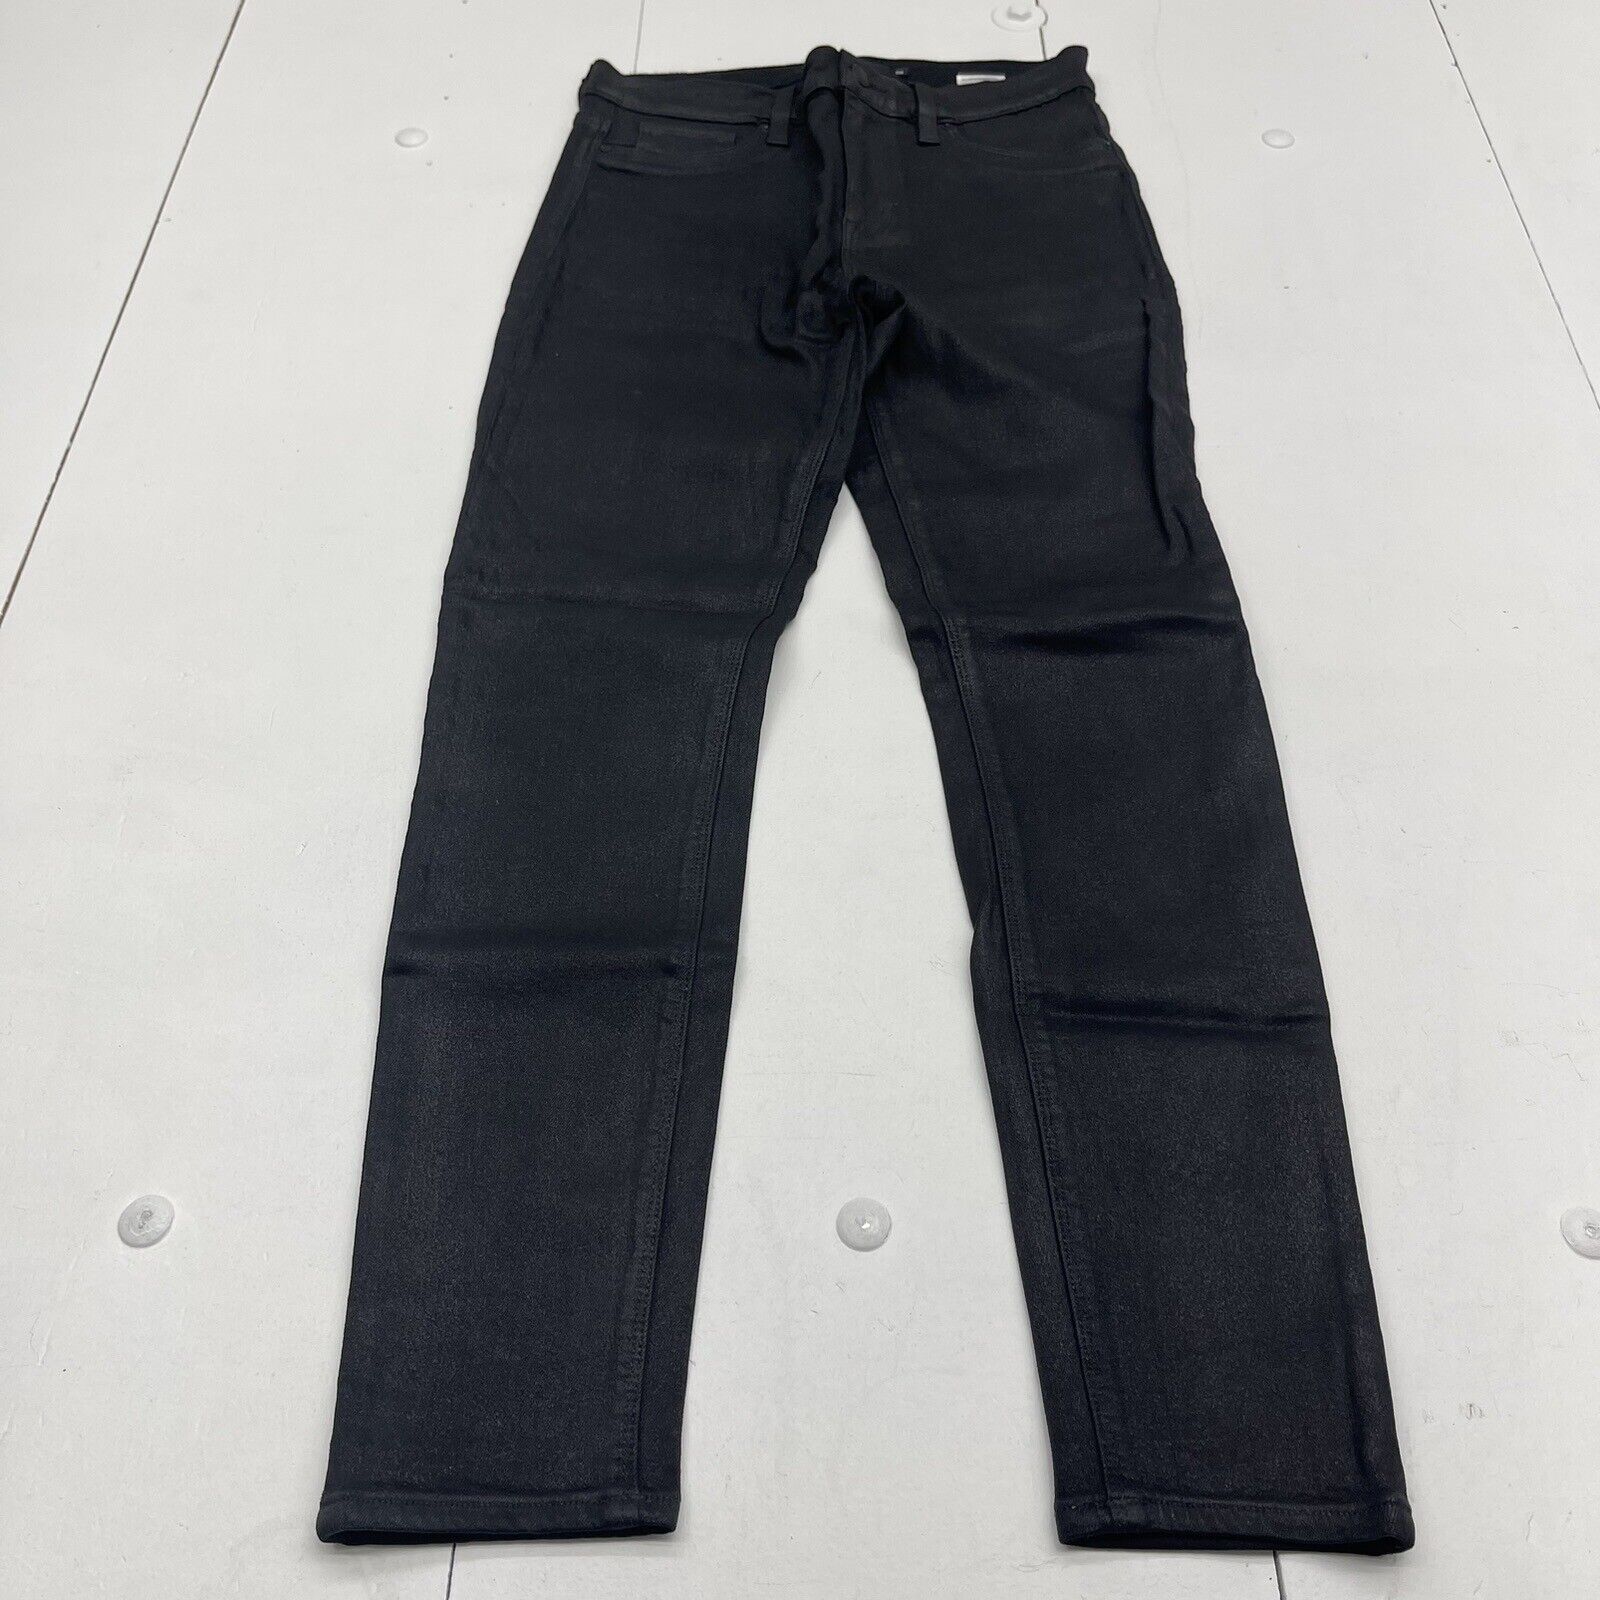 Channel Seam skinny jeans in black - 3 X 1 N Y C | Mytheresa